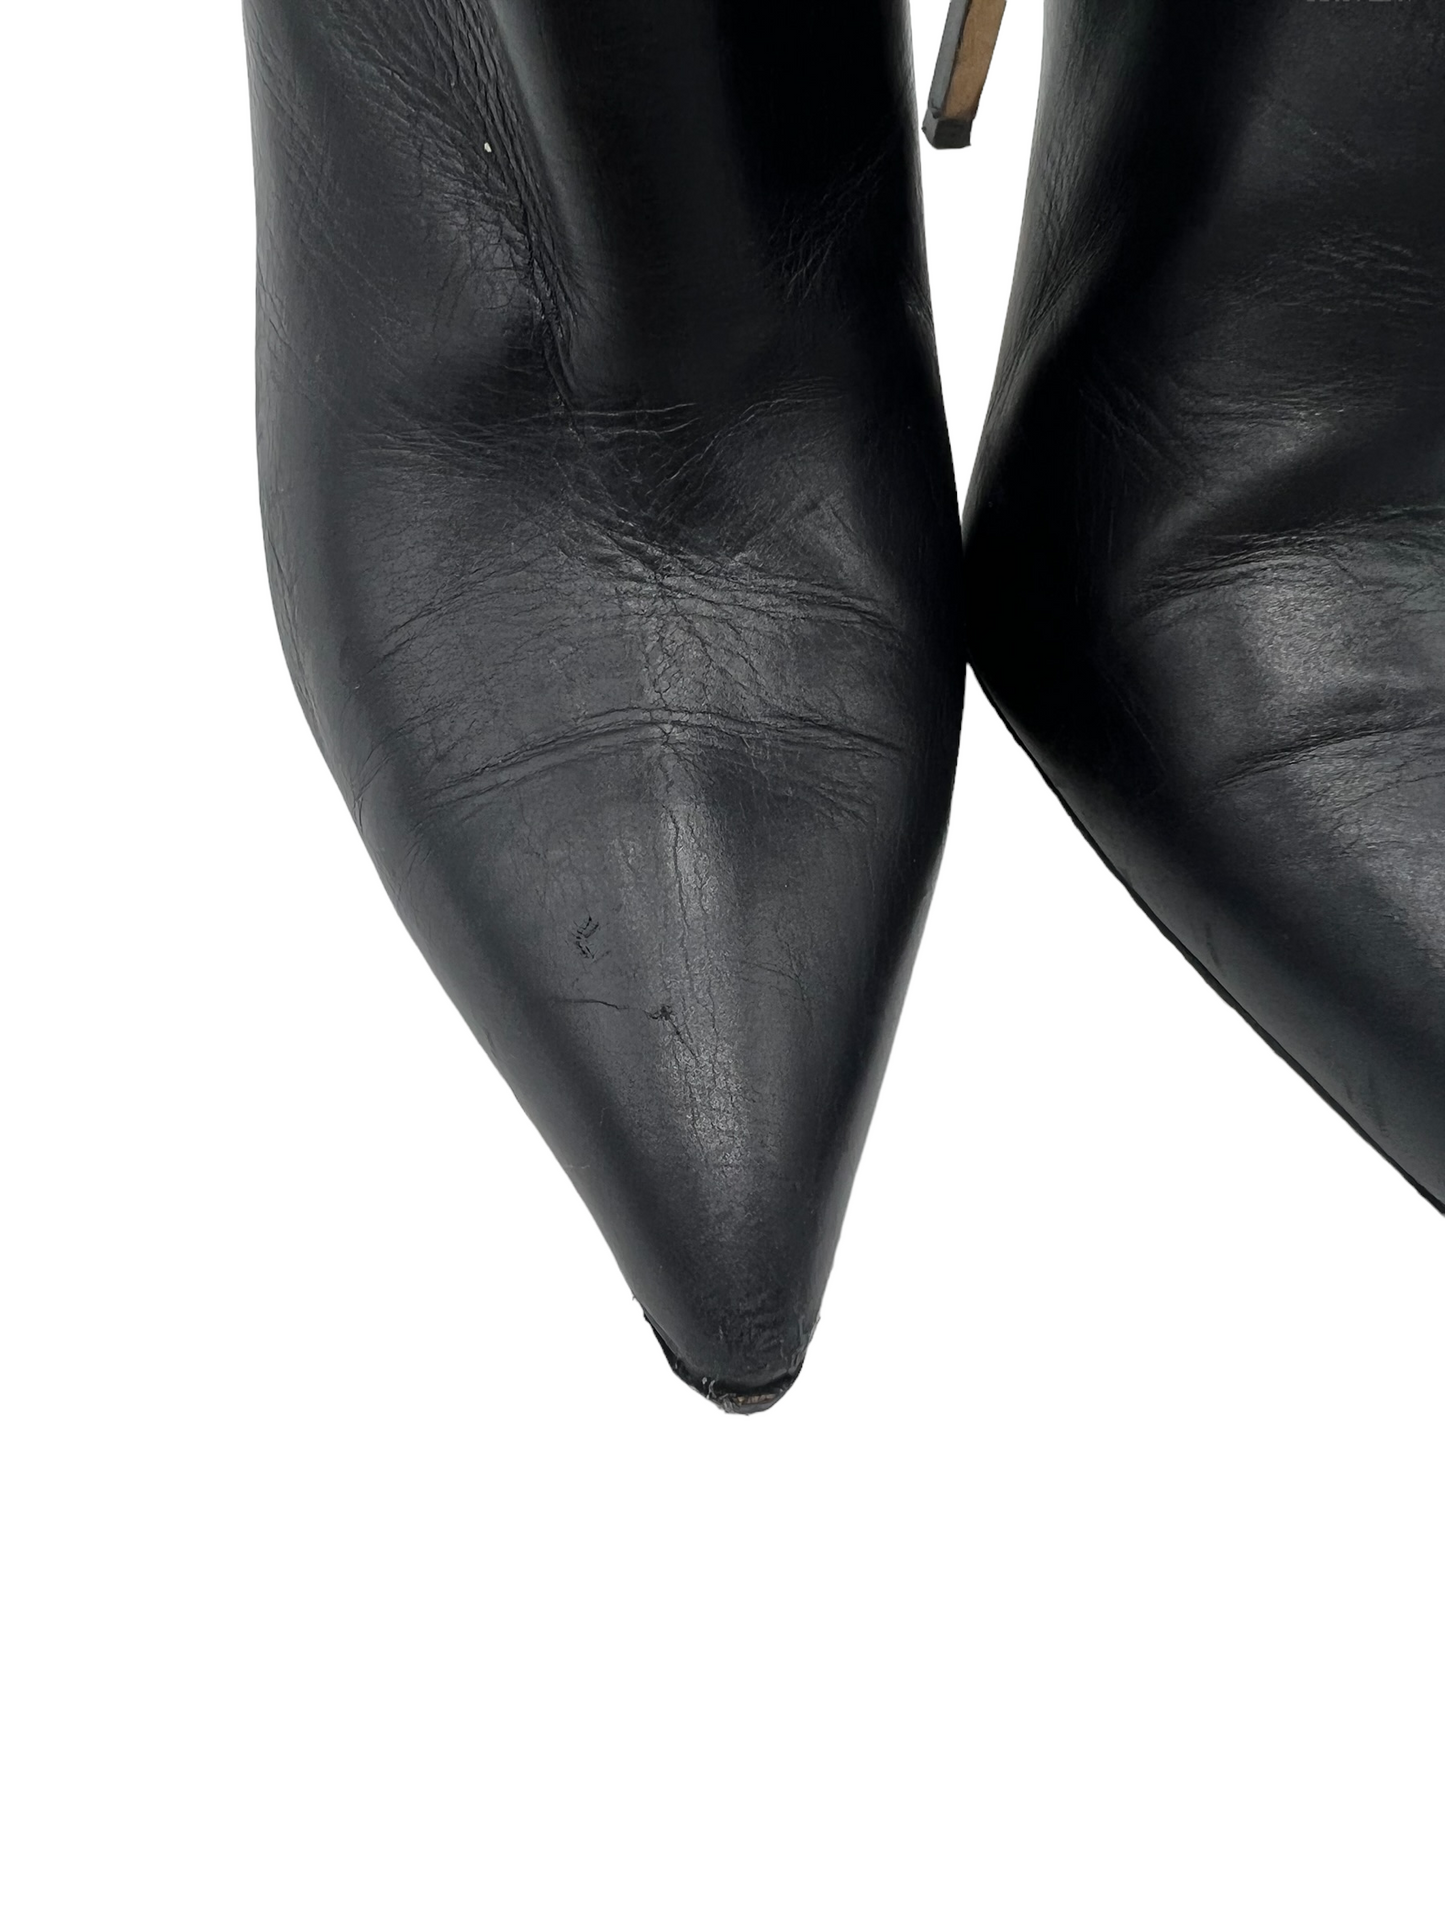 Manolo Blahnik Black Leather Studded Size 38 Boots